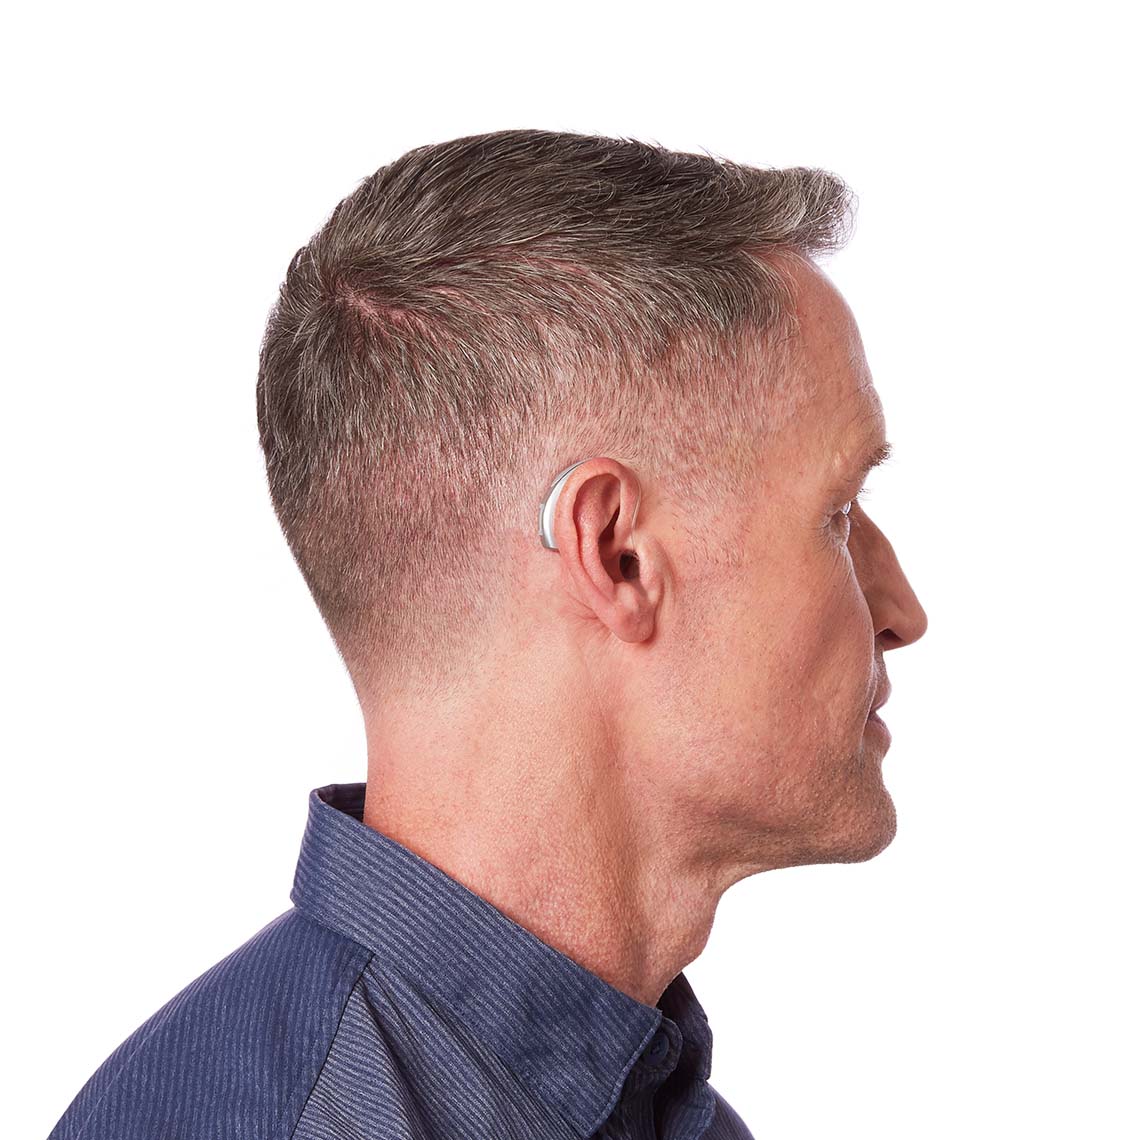 A Power Plus BTE 13 shown on a man's ear